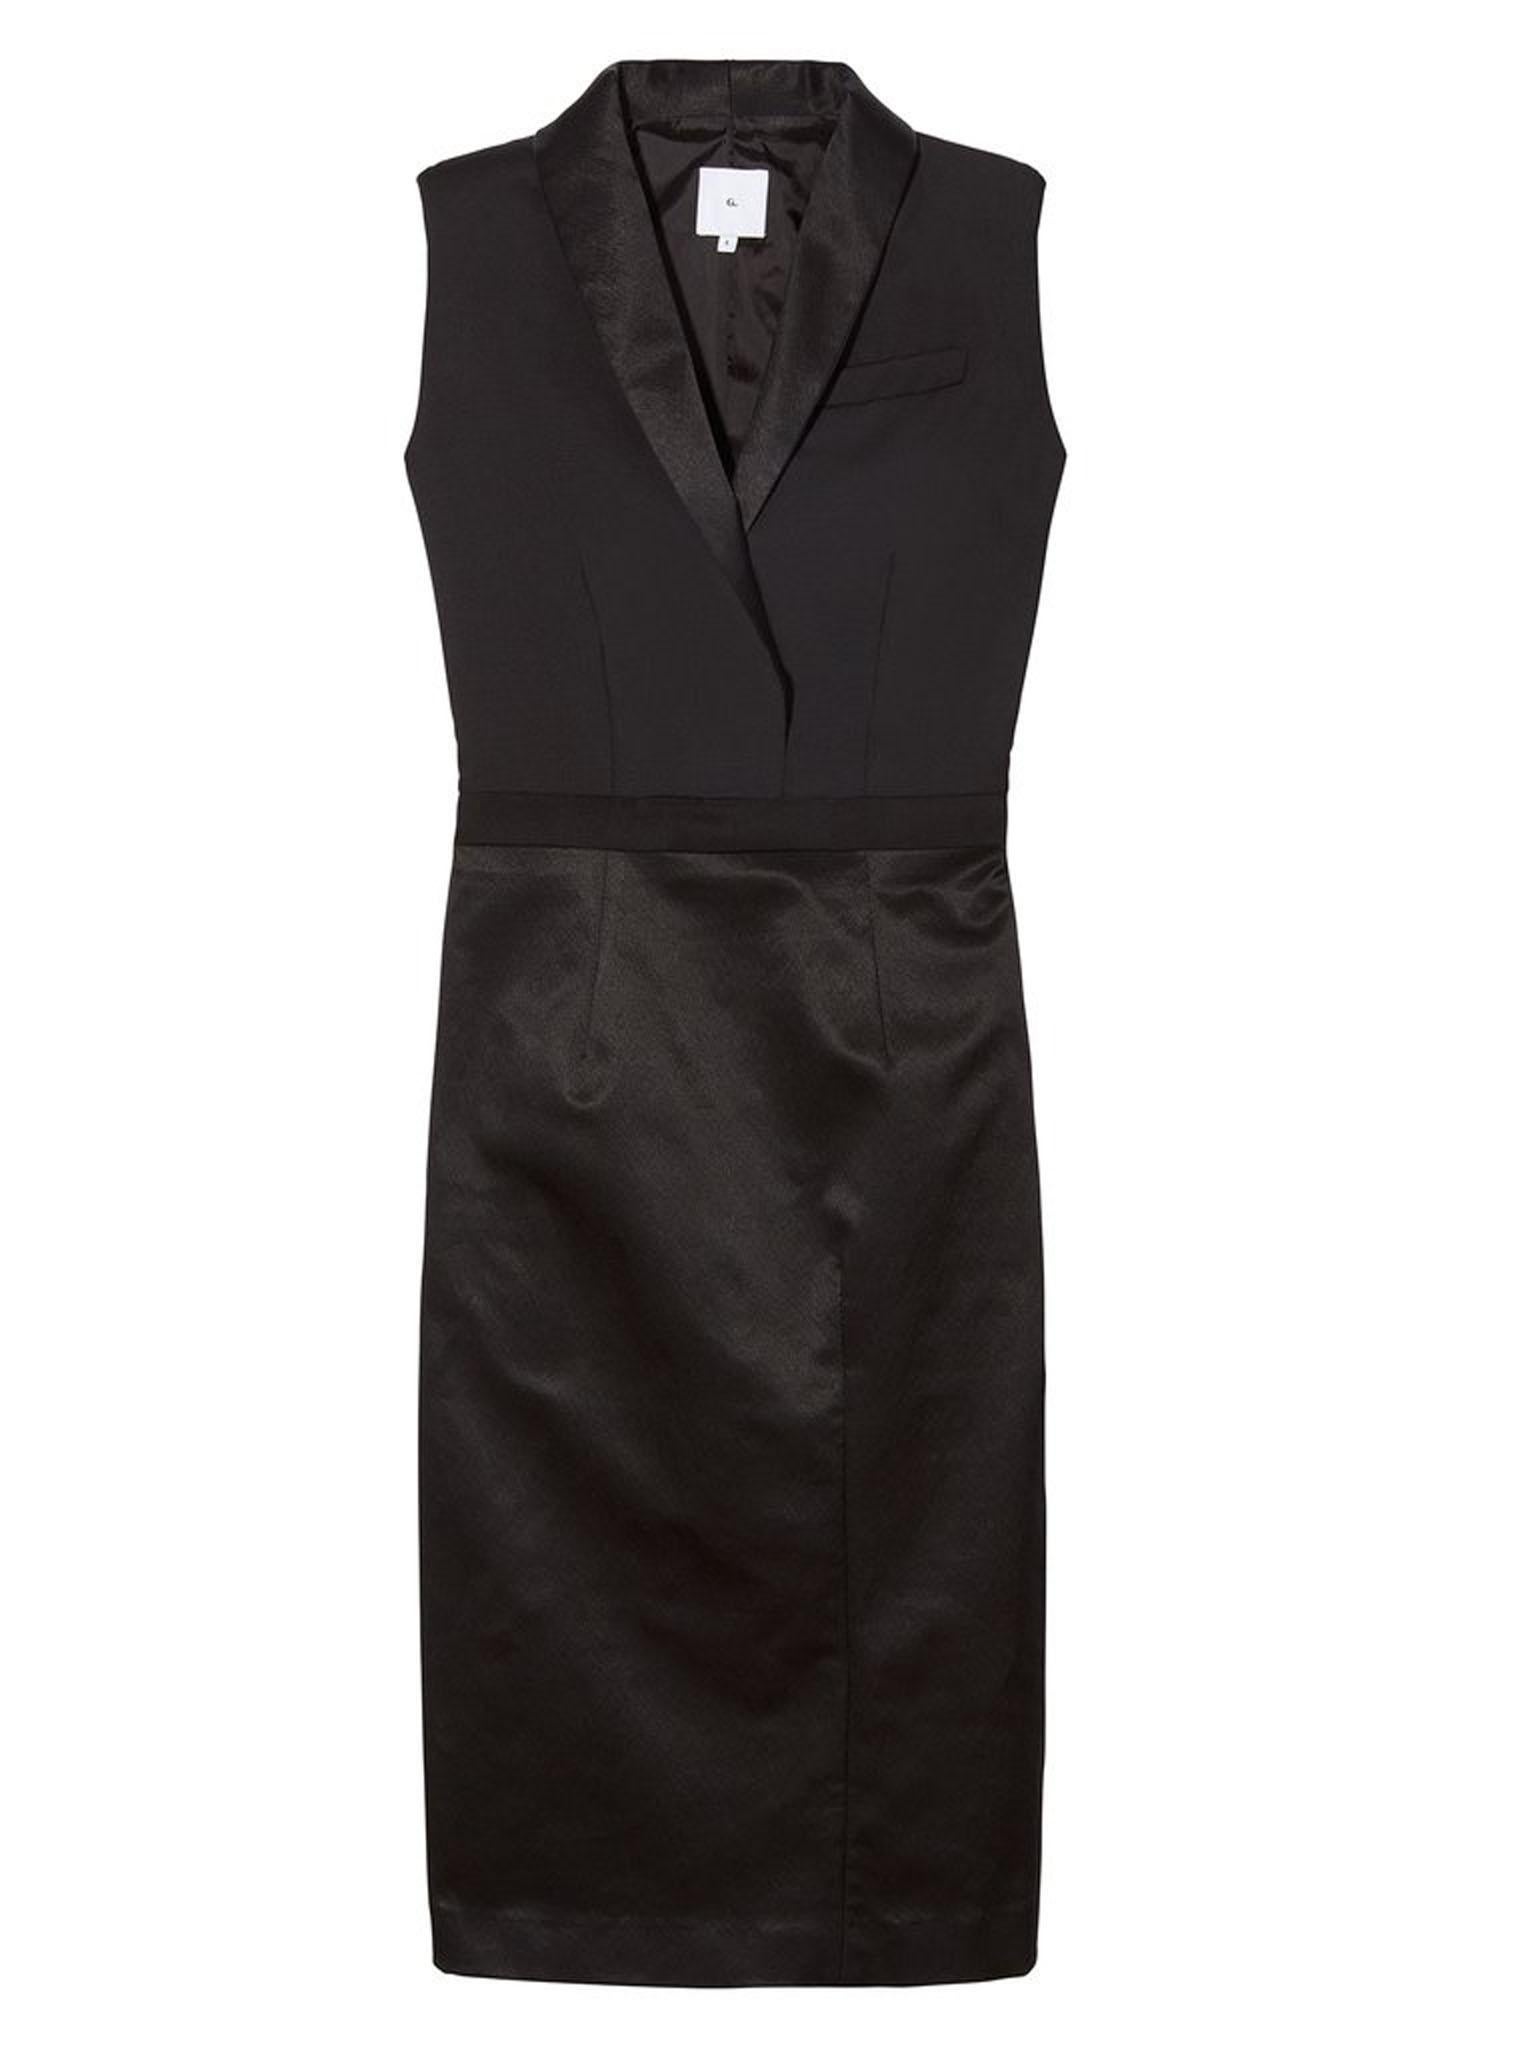 The Altieri Shawl Collar Dress costs $595